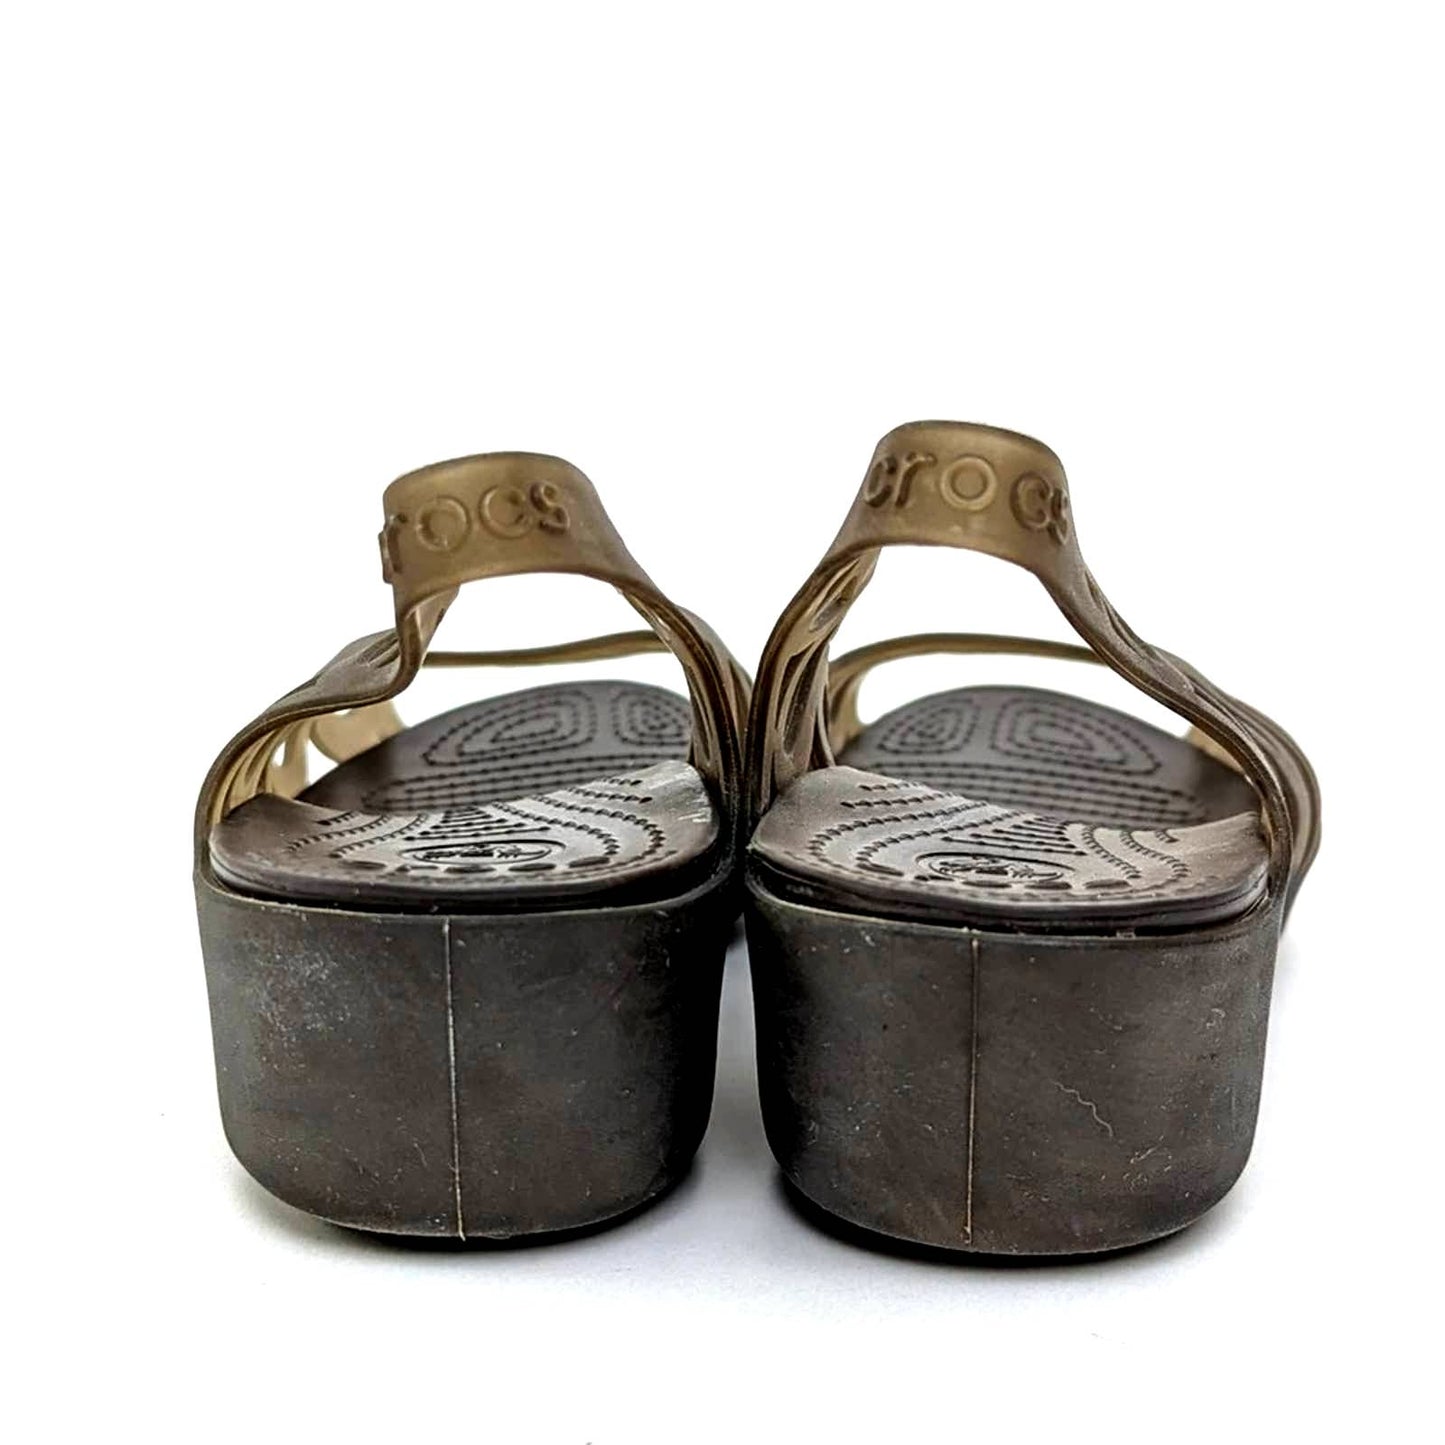 Crocs Adrina III Mini Wedge Sandal Shoes - 10